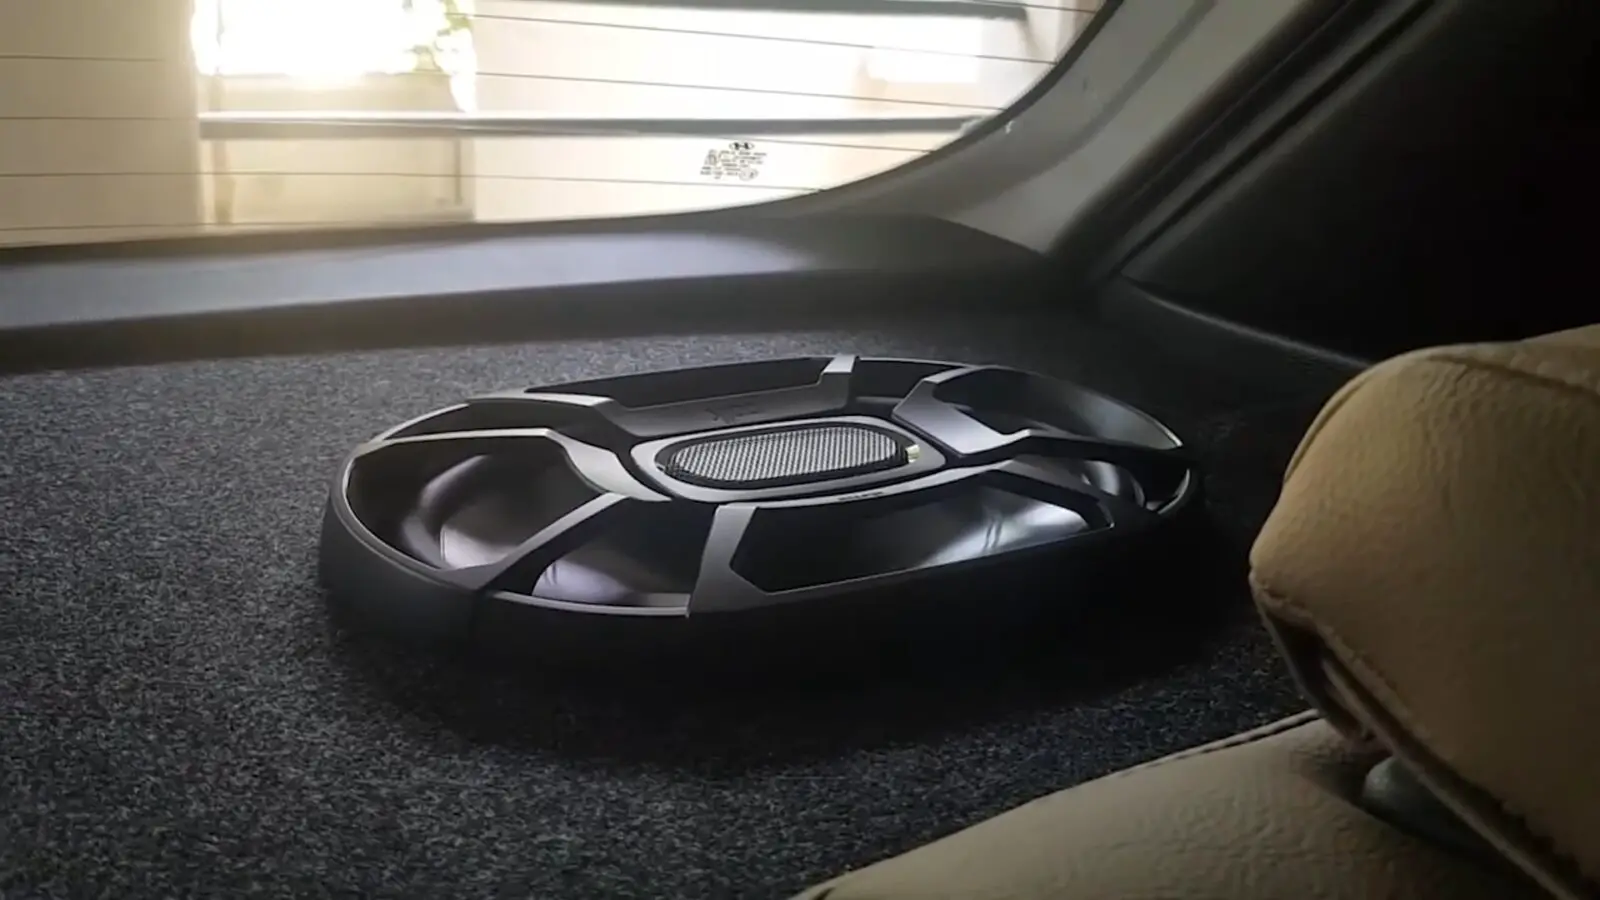 Best 6x9 Speaker in car